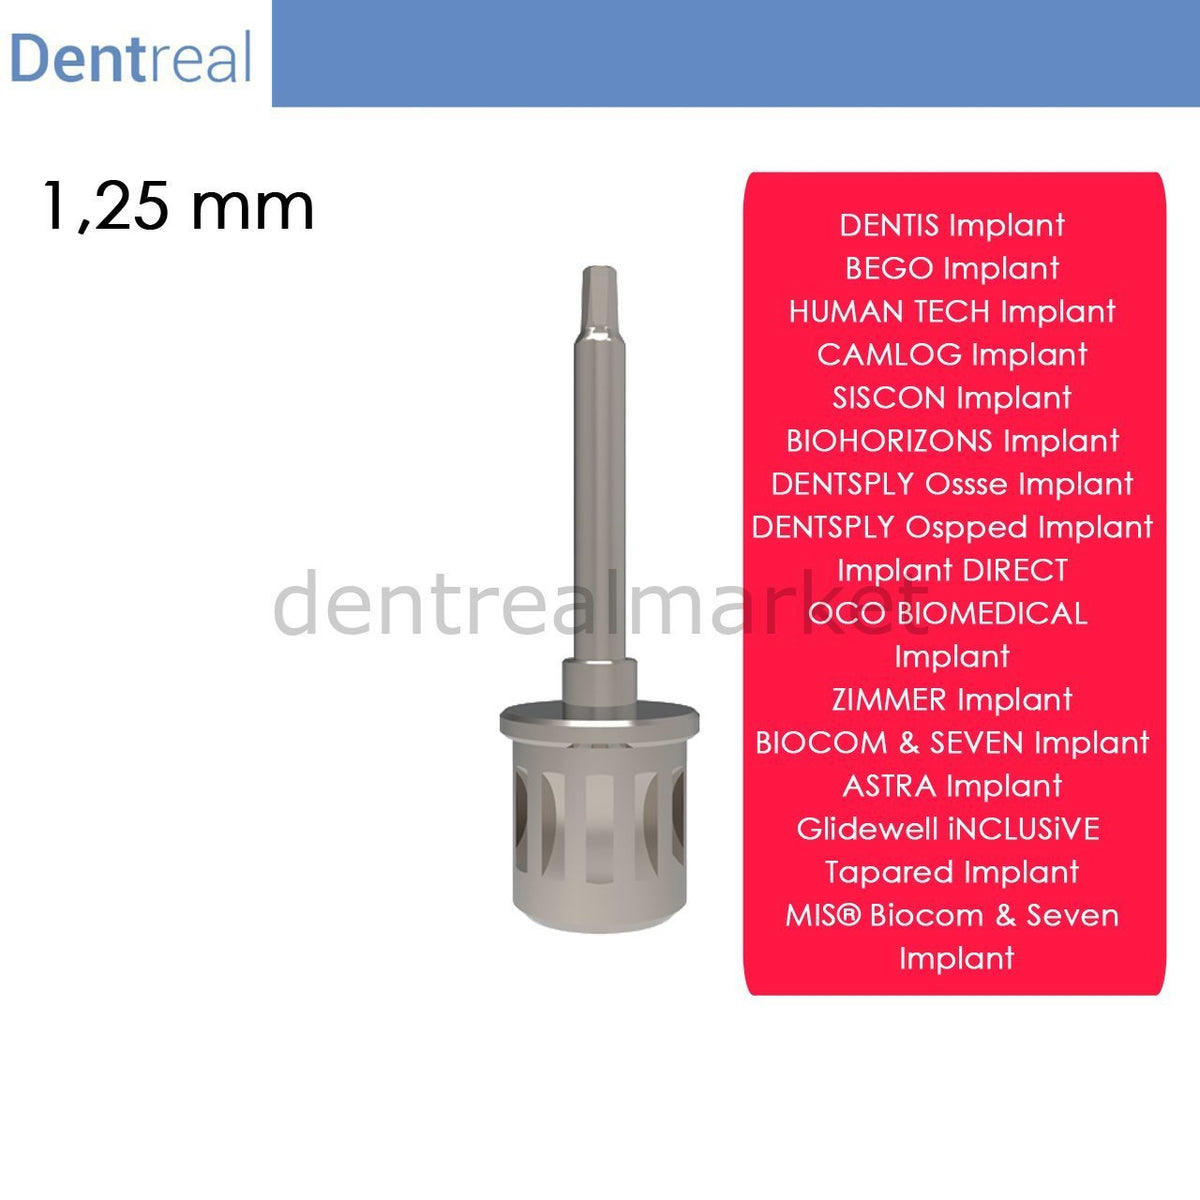 DentrealStore - Dentreal Screwdriver for Biohorizons Implant - 1,25 mm Hex Driver